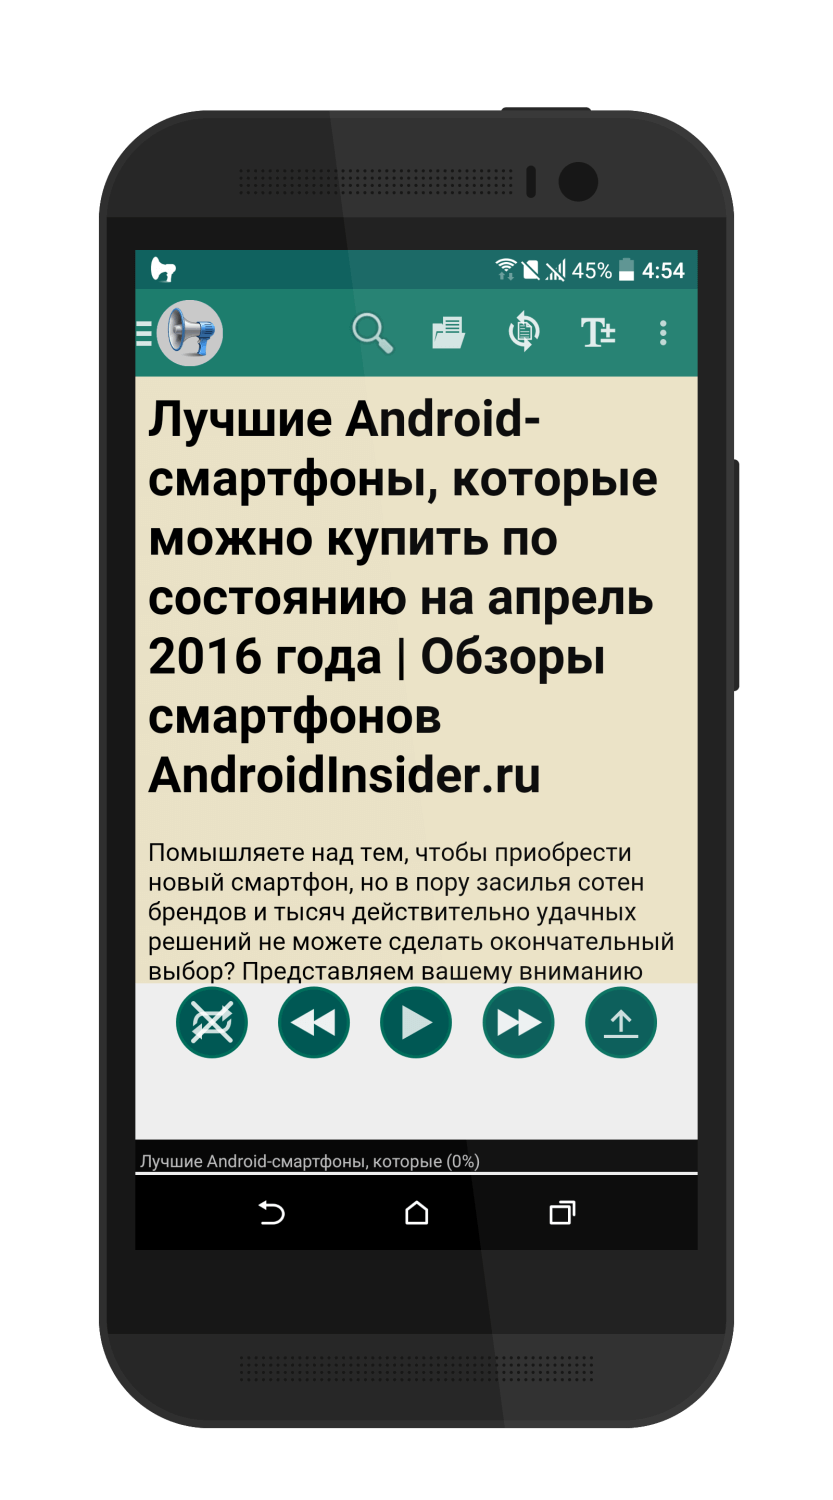 Voice aloud. Воспроизведение текста приложение. Читалка на андроид с голосом. Voice Aloud Reader Android.